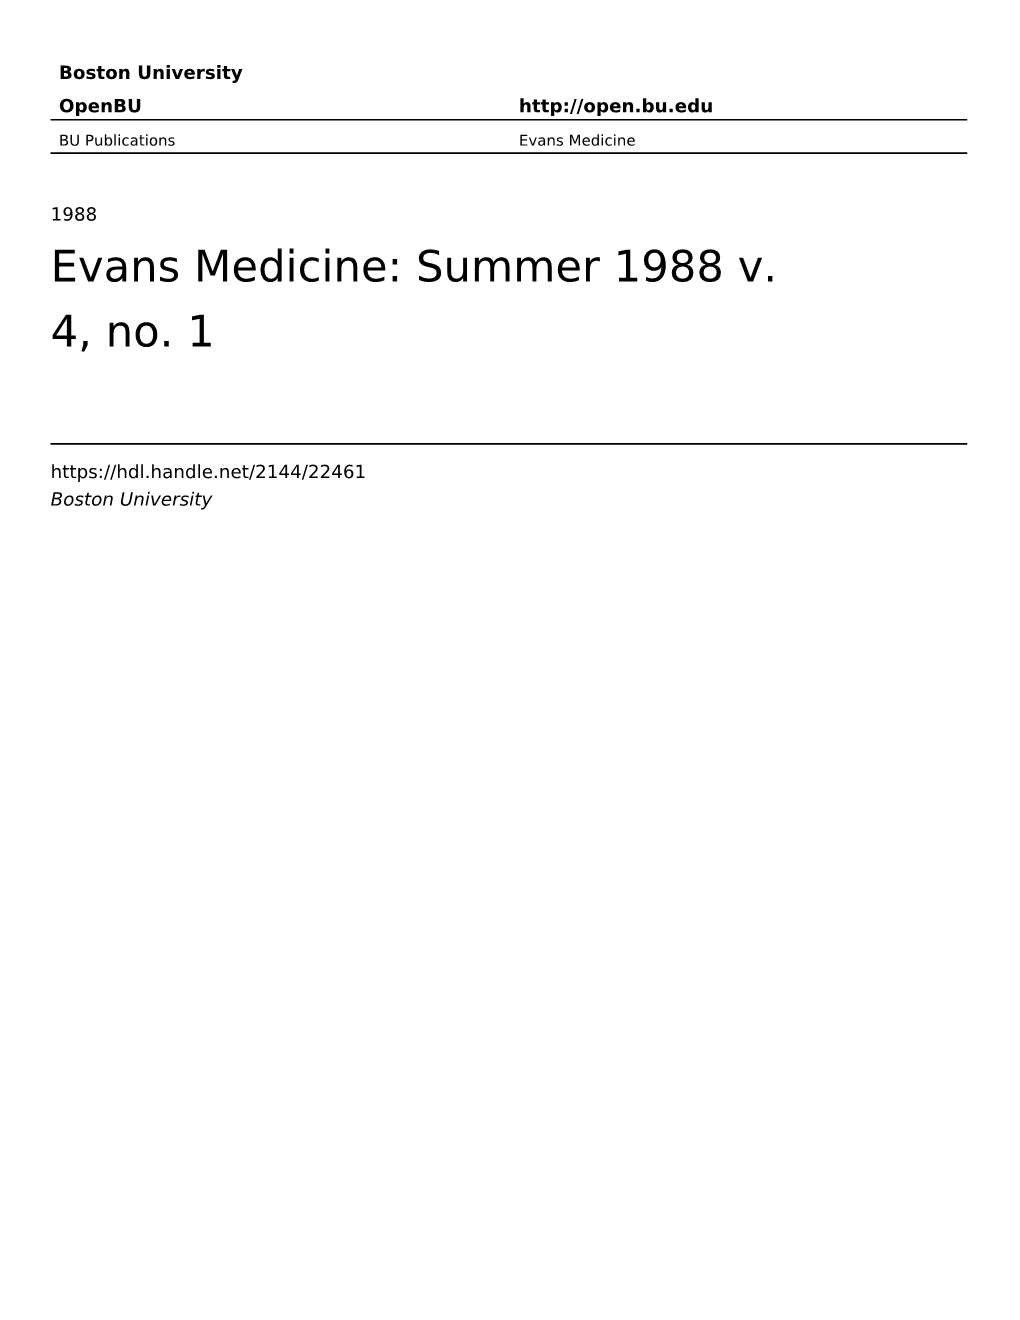 Evans Medicine